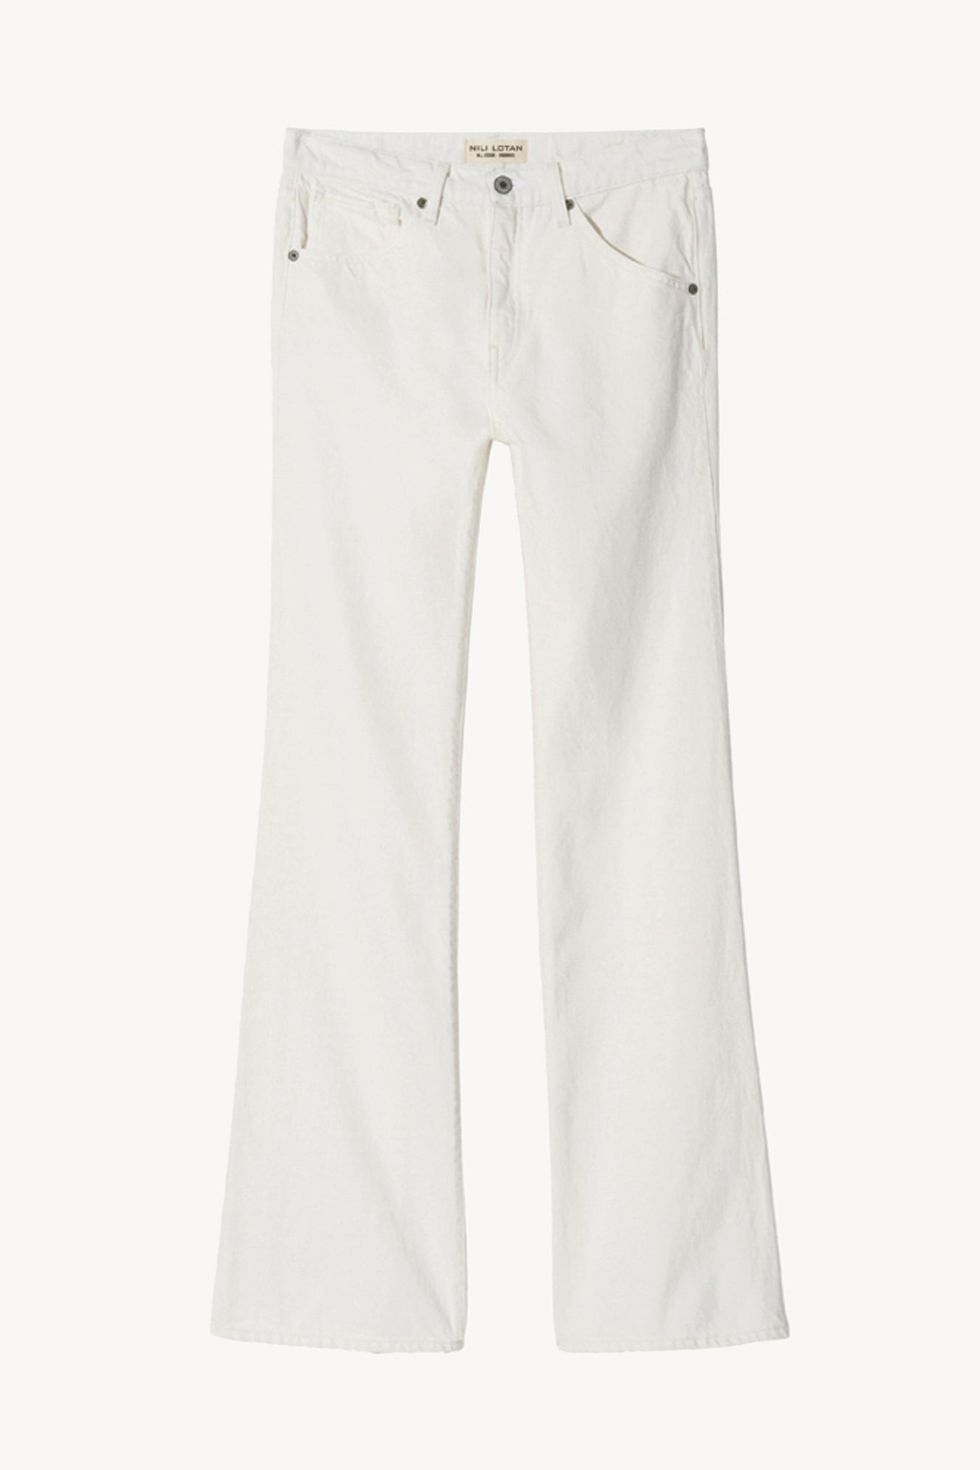 20 Best White Jeans to Wear Spring 2024 - Stylish White Denim for Women